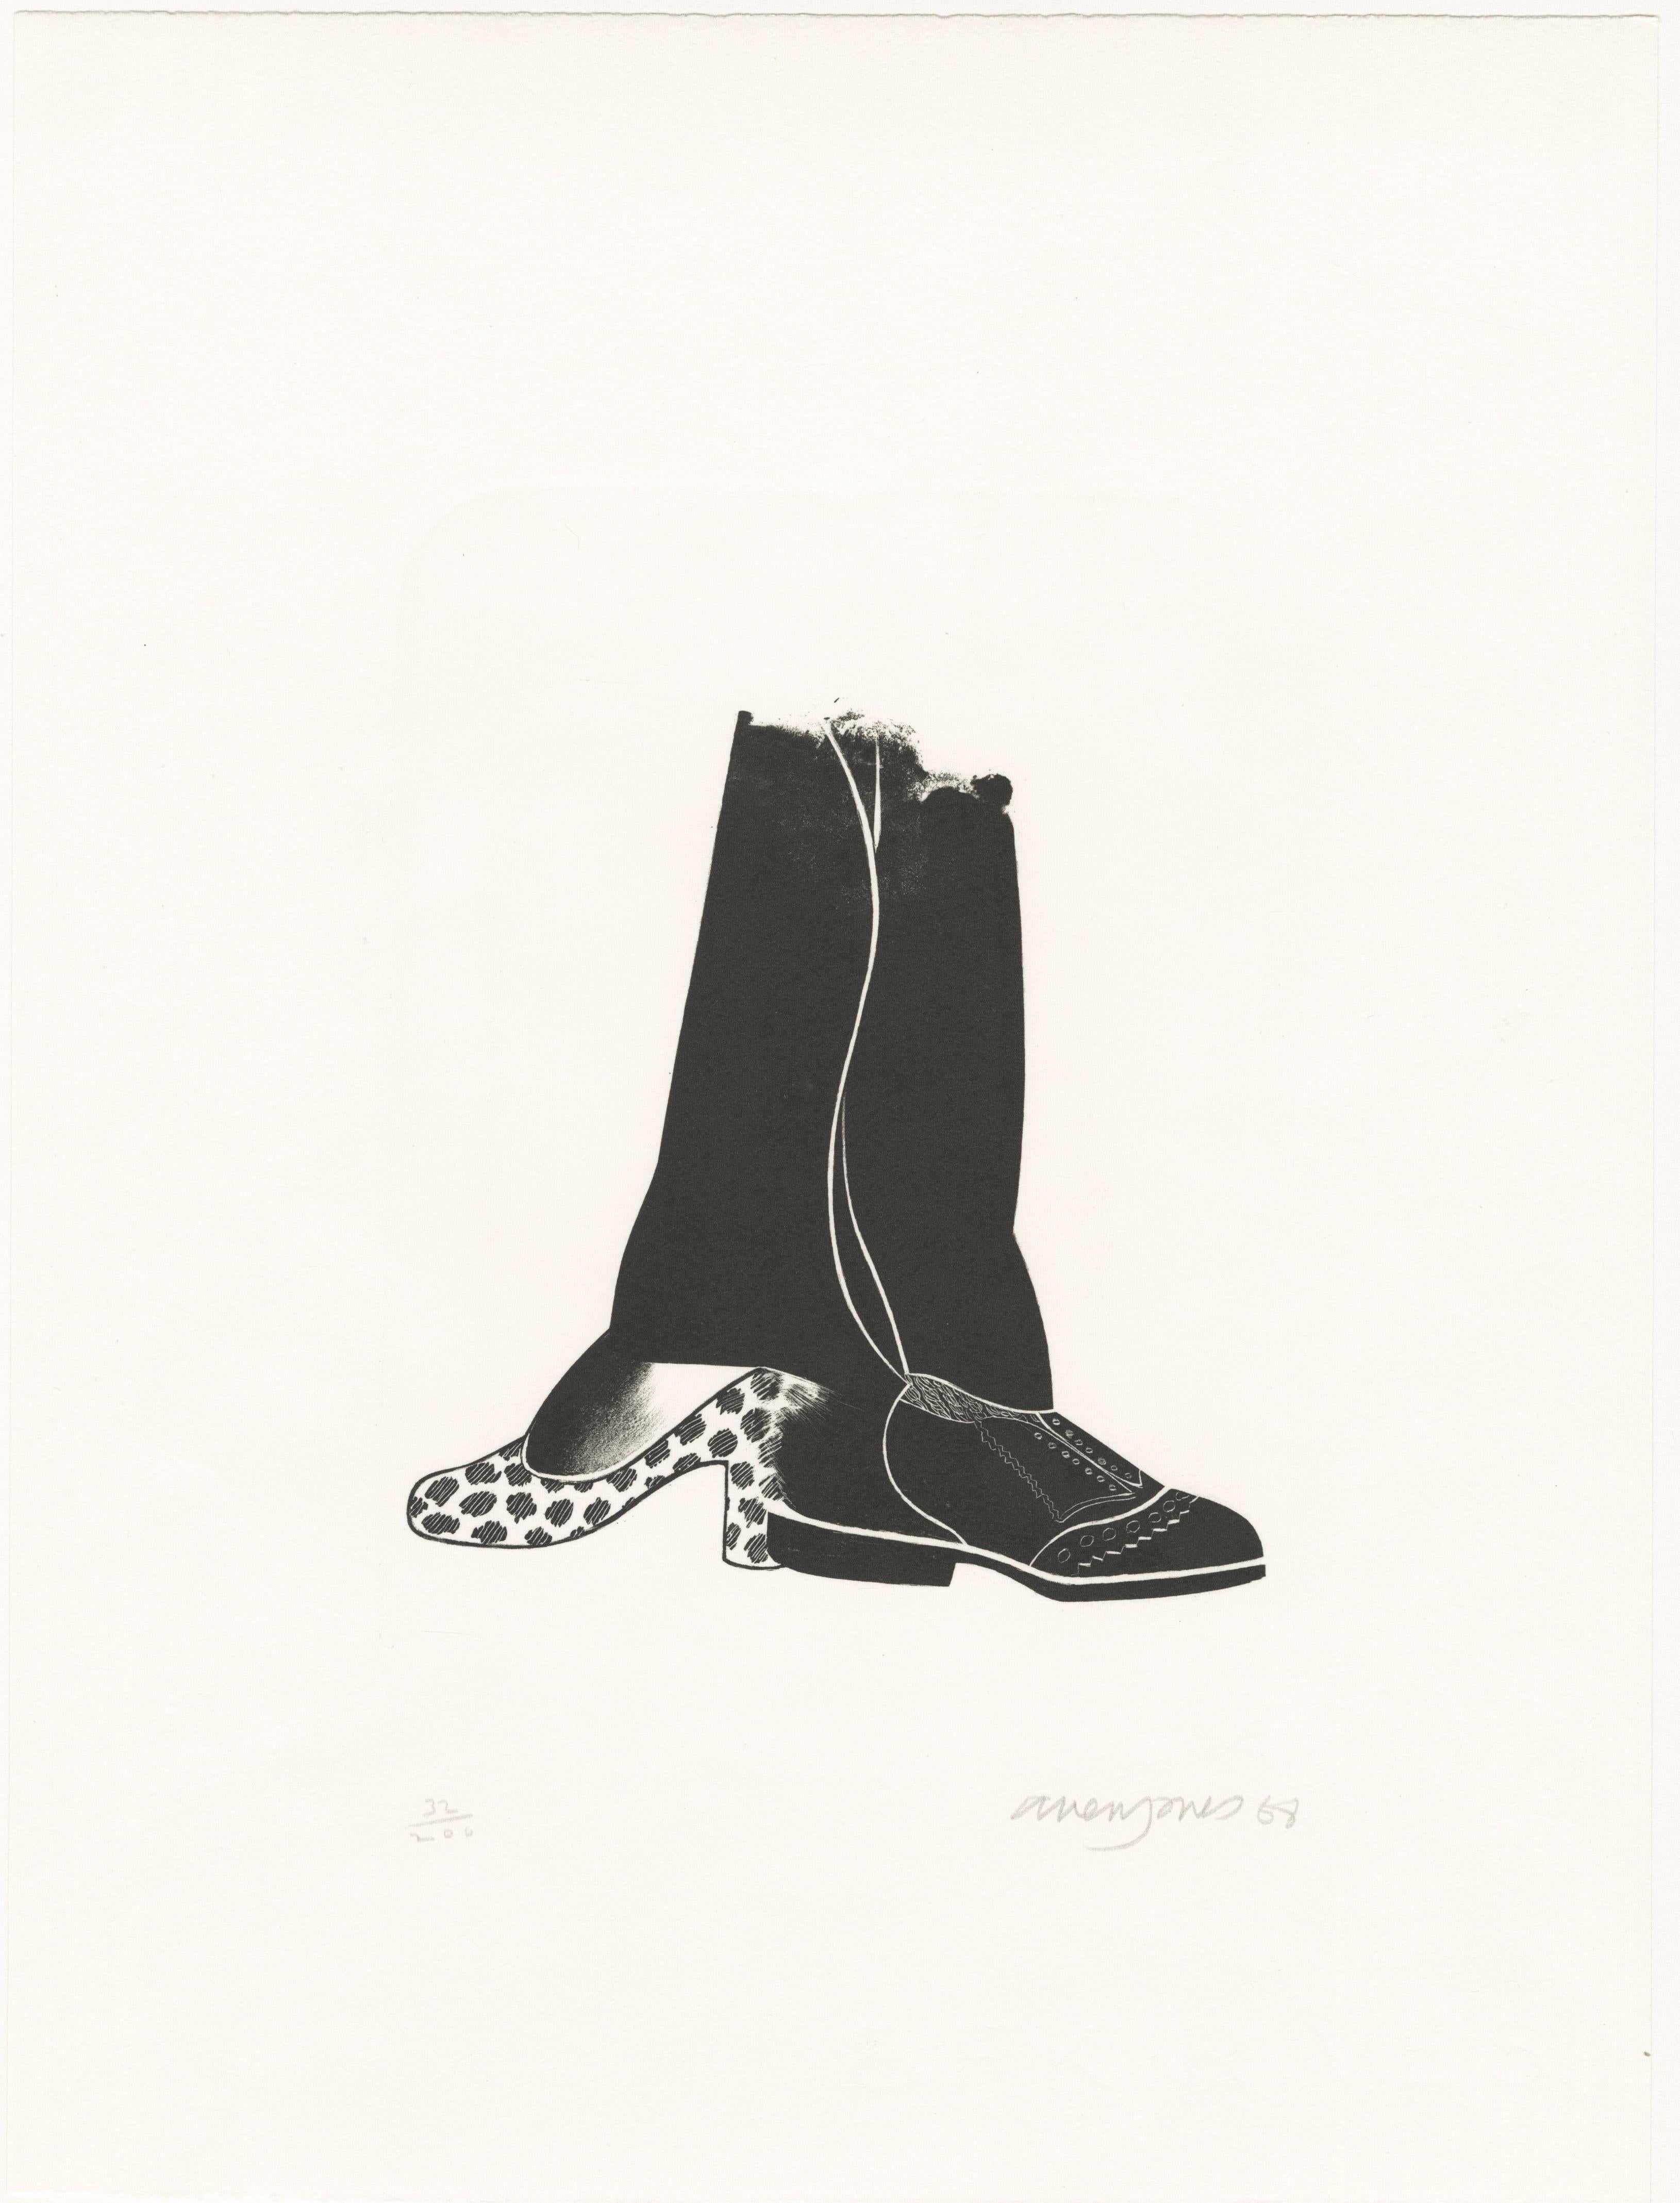 Allen Jones Still-Life Print - Shoe Box (C)